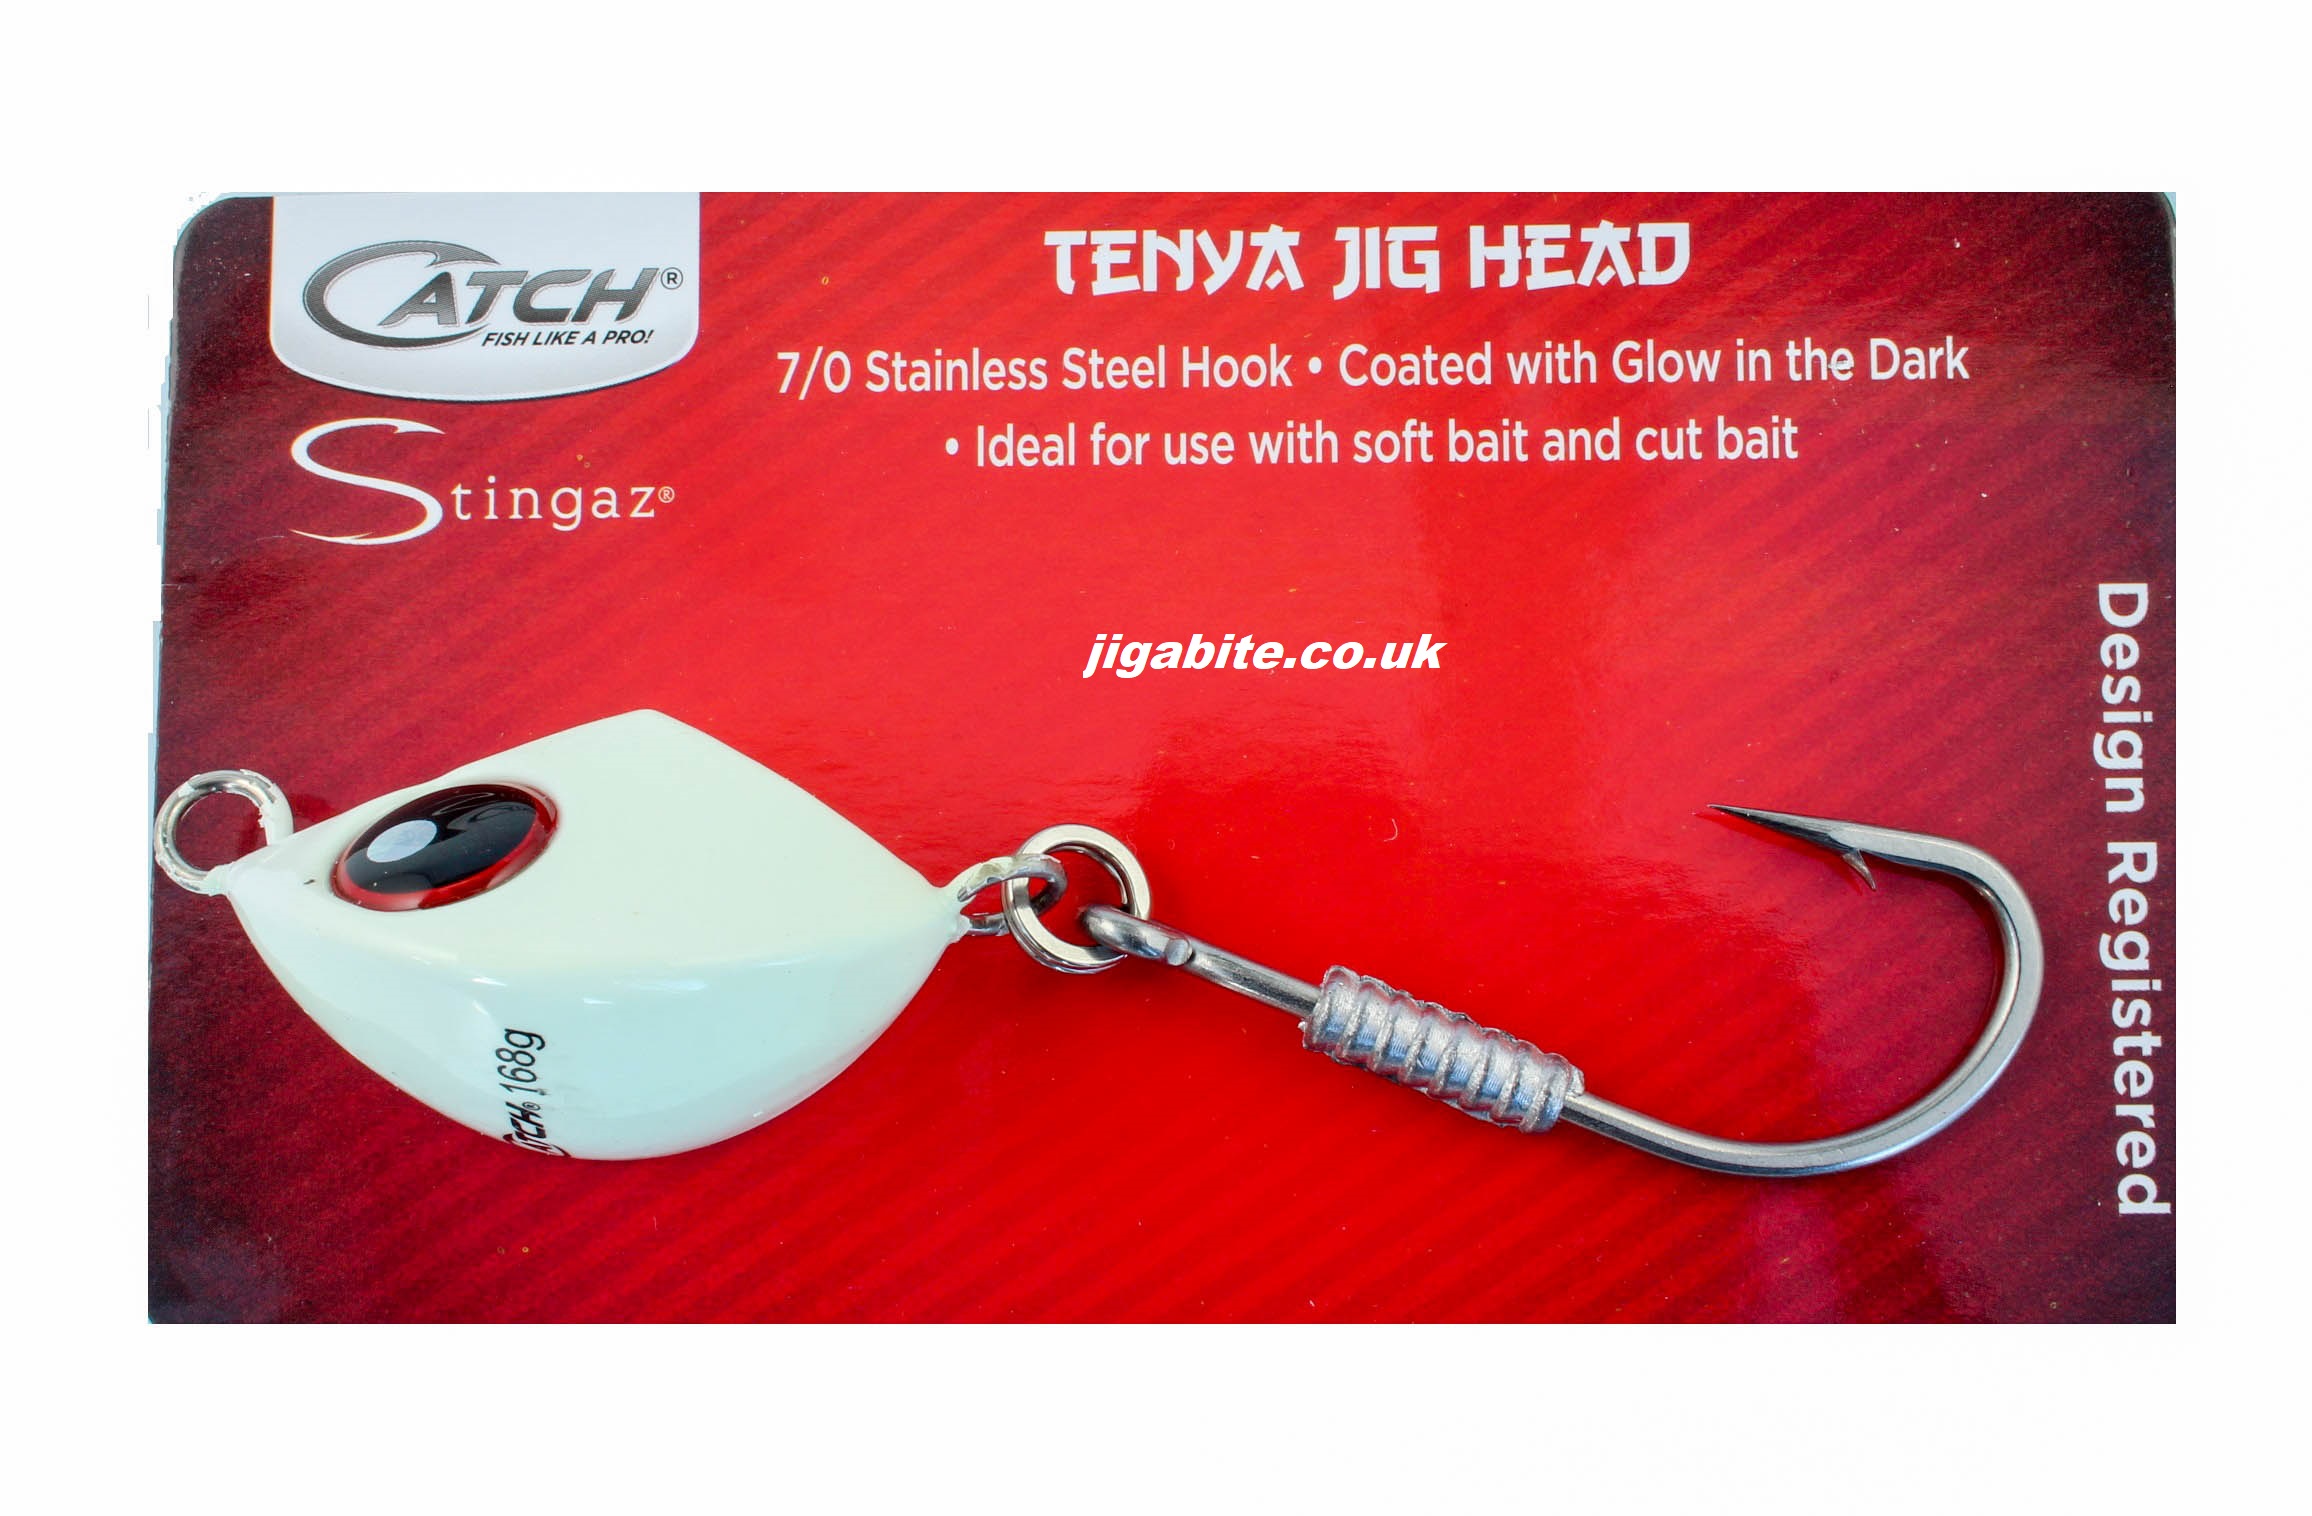 Jighead - Tenya - Stingaz -  Fishing Jigs